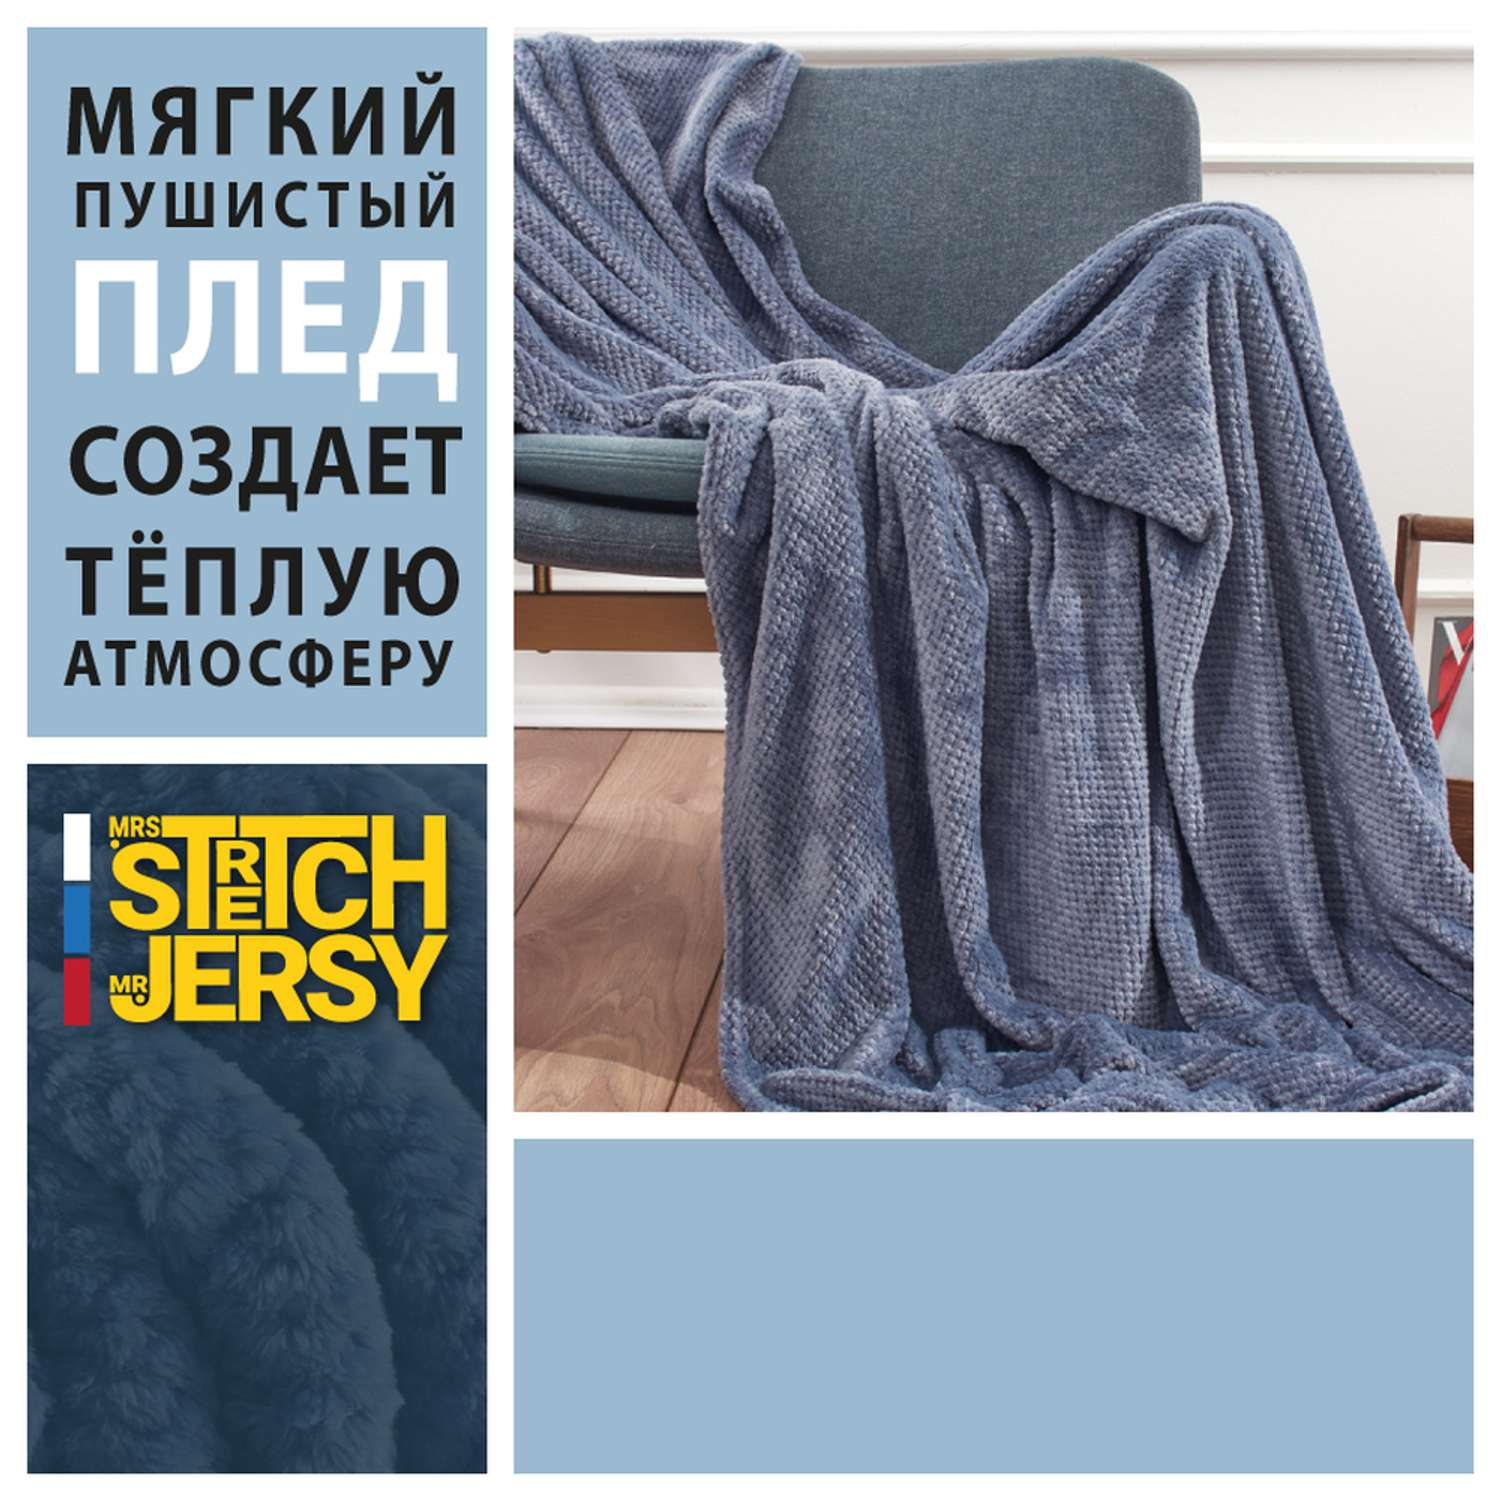 Плед 200*220 см Mrs.Stretch Mr.Jersy плотность 230 гр с фактурой Пиноли сине-серый - фото 2